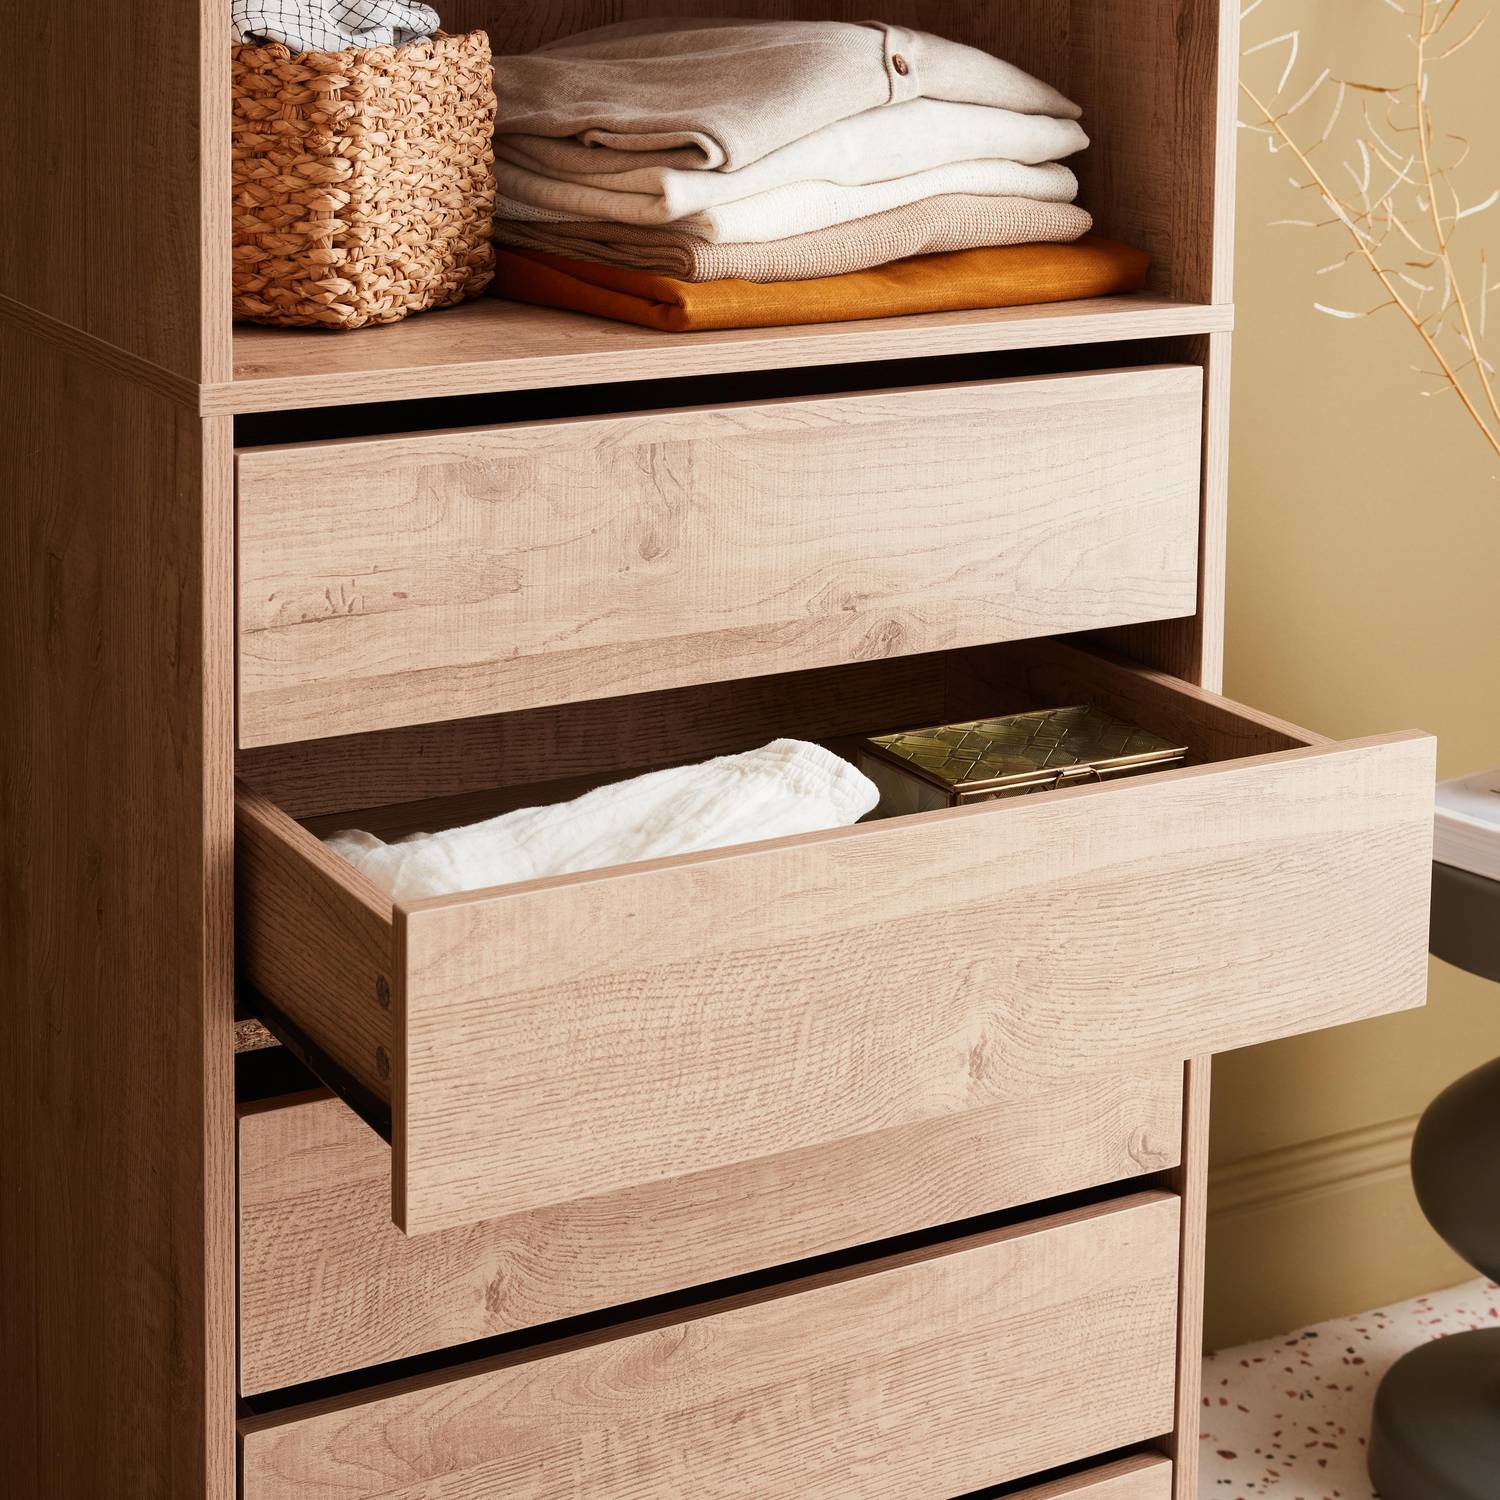 Modular open wardrobe drawer and shelf unit, 60x45x180cm, Modulo, 5 drawers, 2 shelves, Natural Photo2